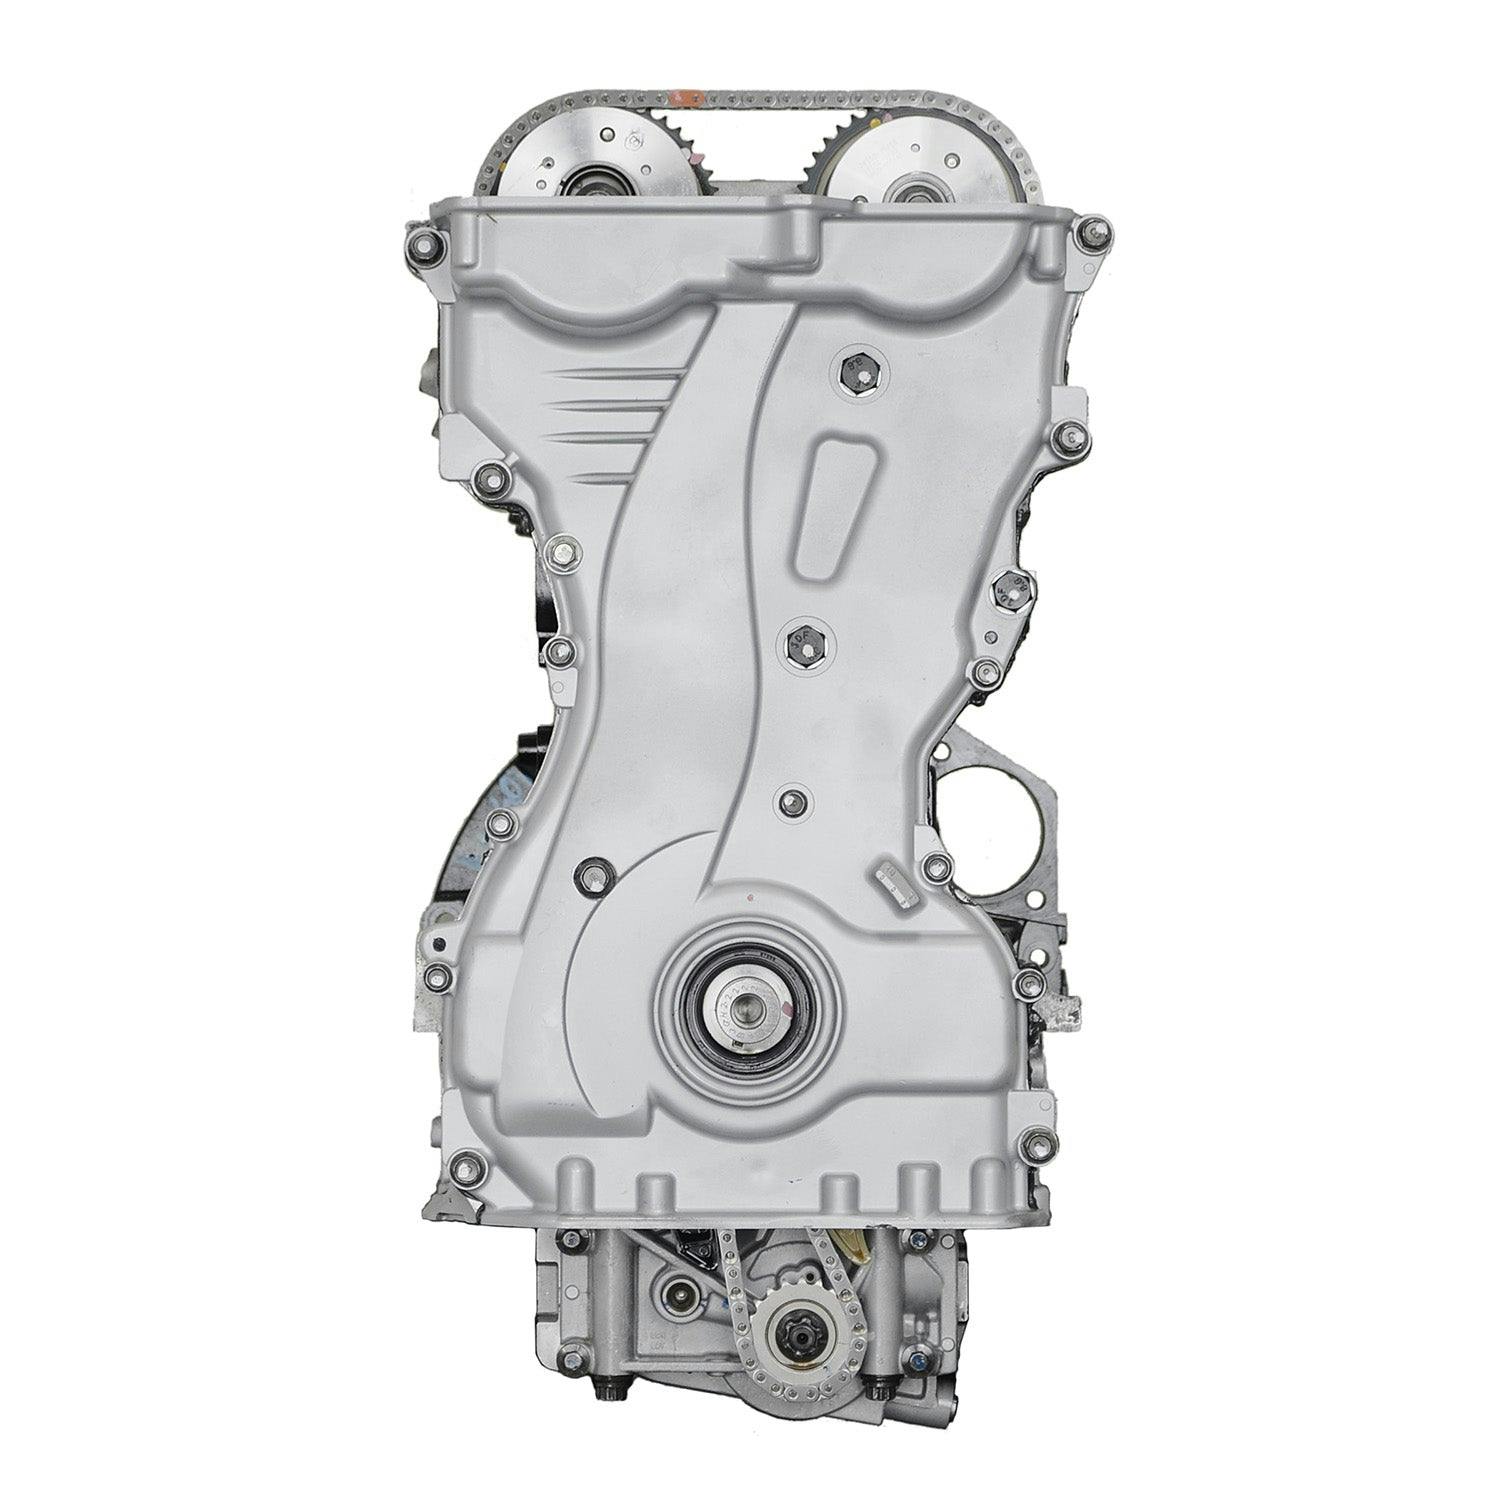 2.4L Inline-4 Engine for 2011-2016 Hyundai Sonata/Kia Optima